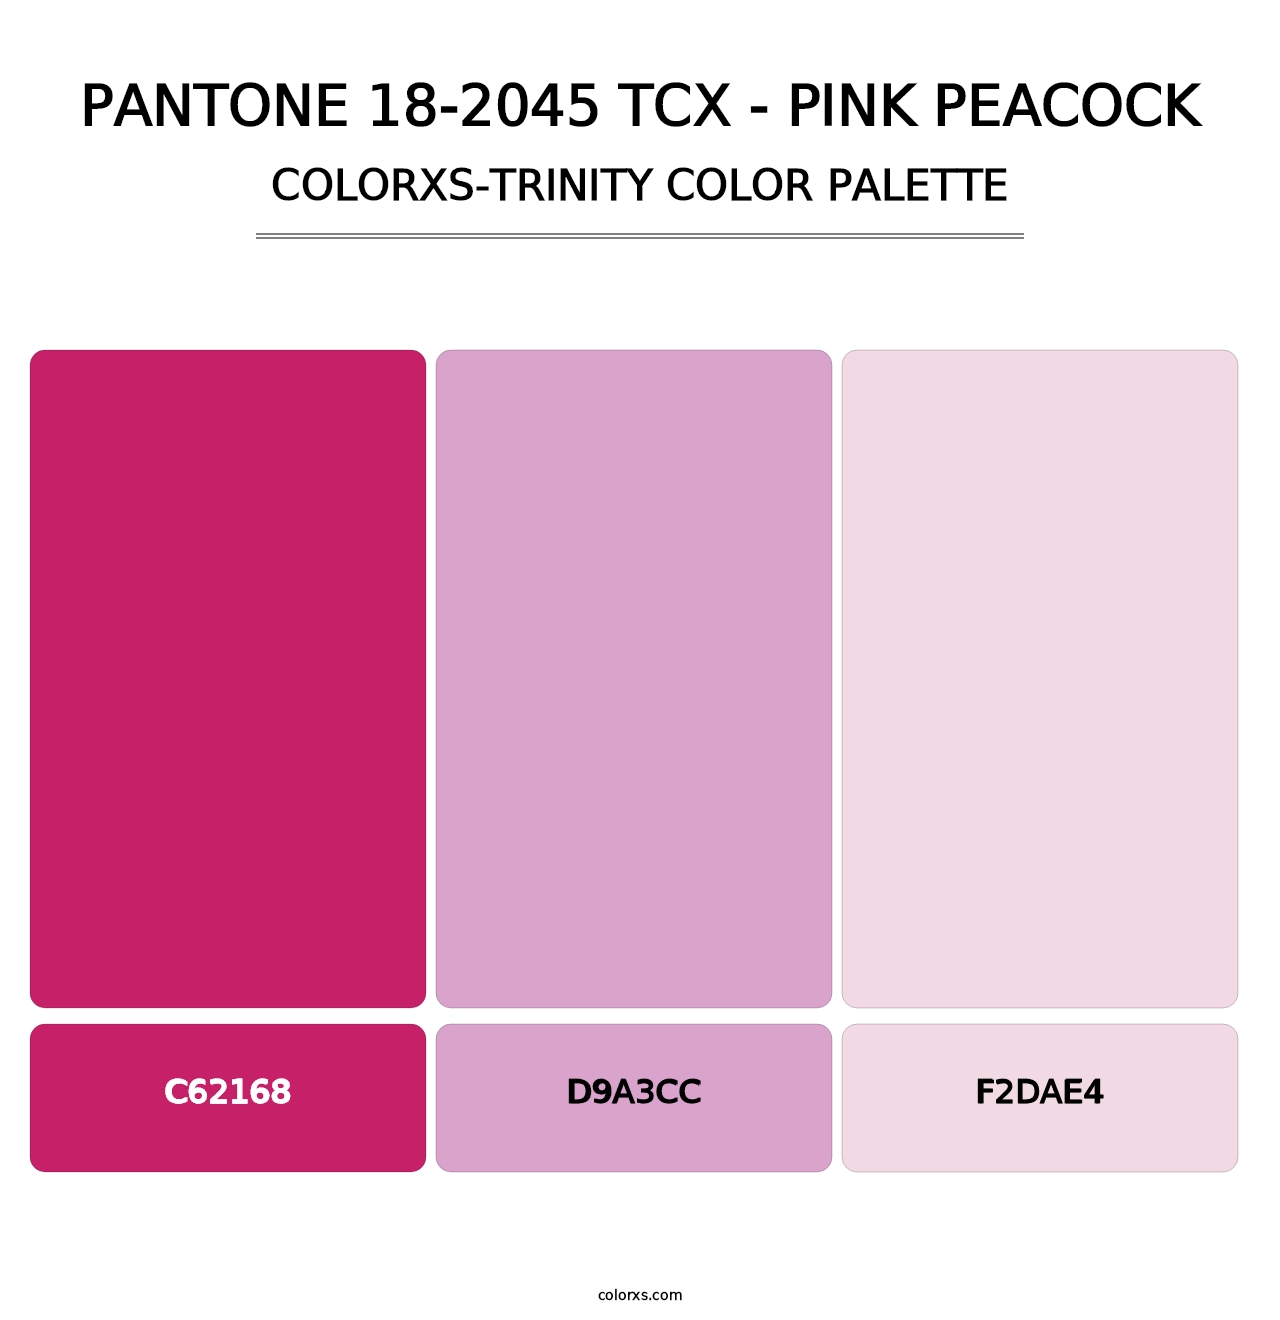 PANTONE 18-2045 TCX - Pink Peacock - Colorxs Trinity Palette